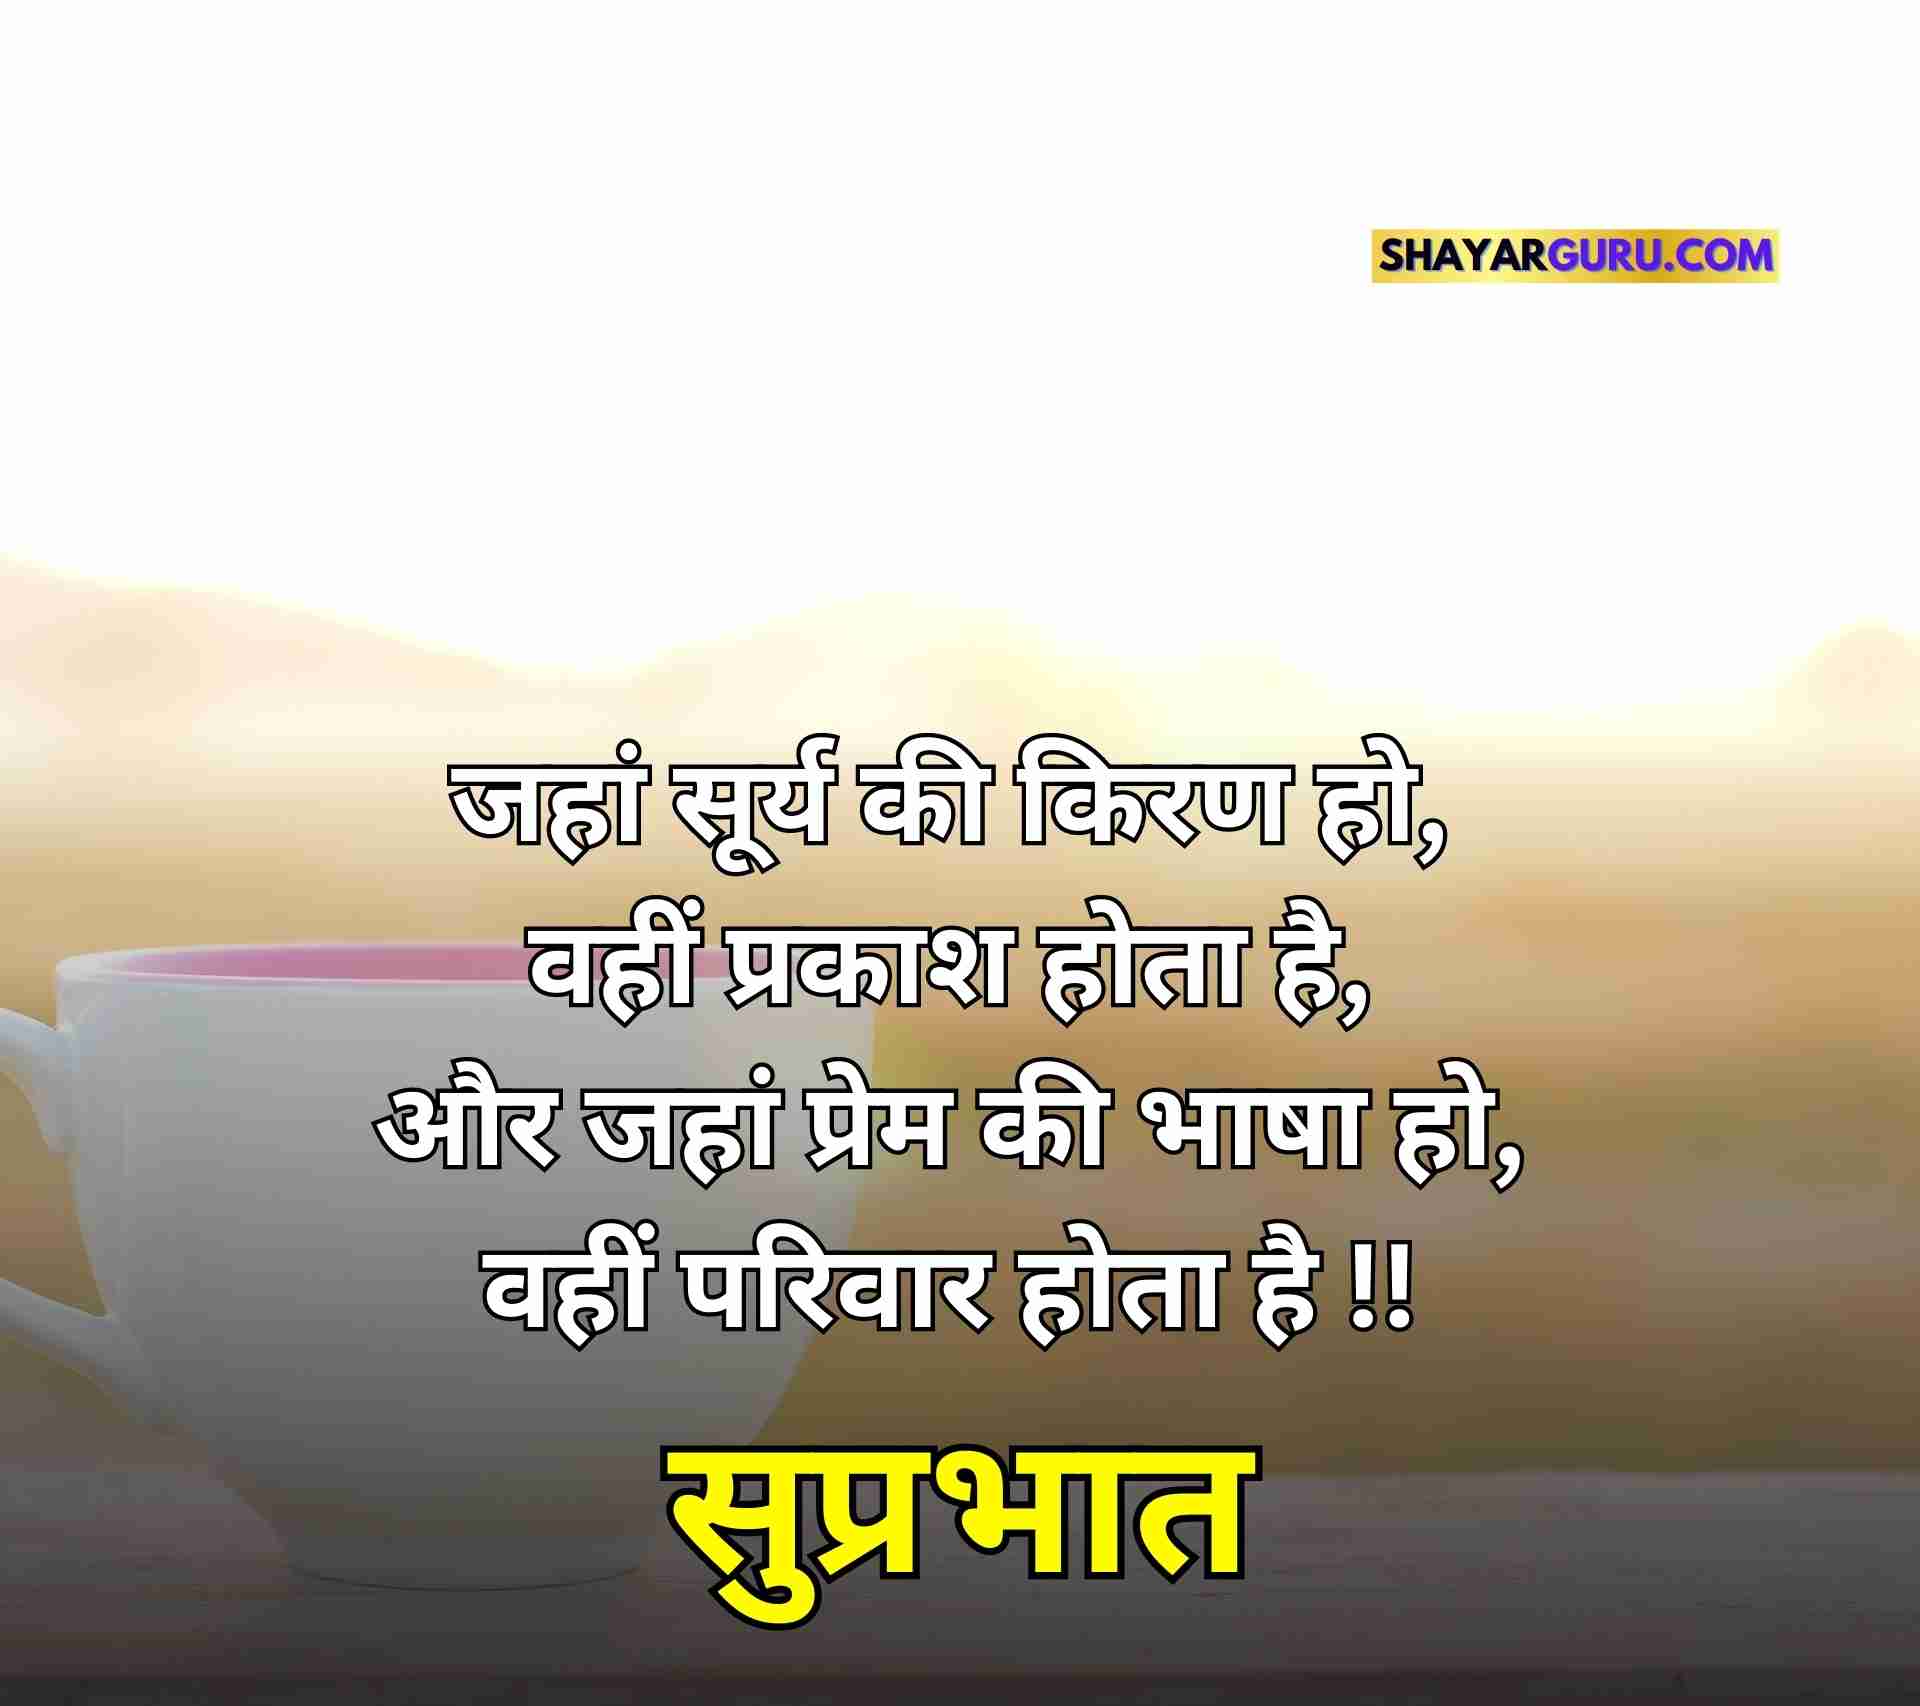 Good Morning Quotes in Hindi Image